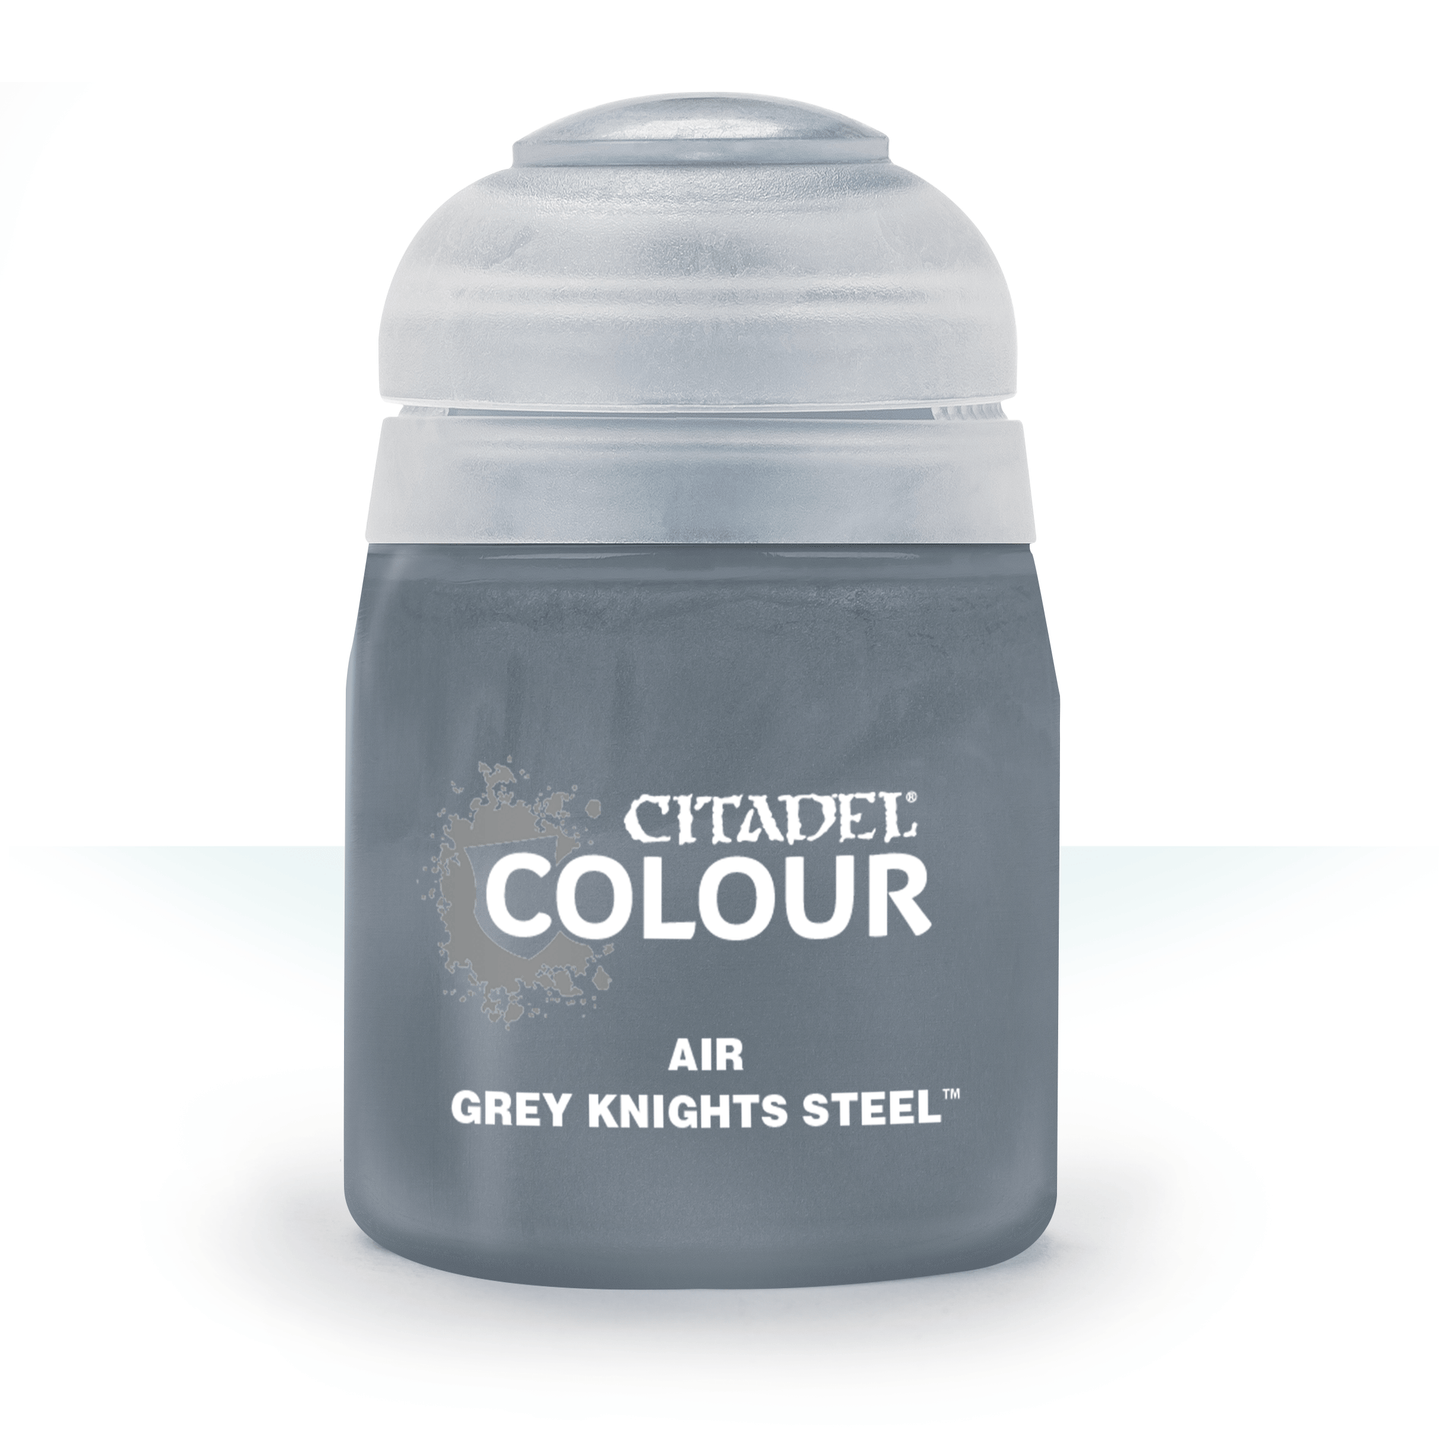 Air: Grey Knights Steel